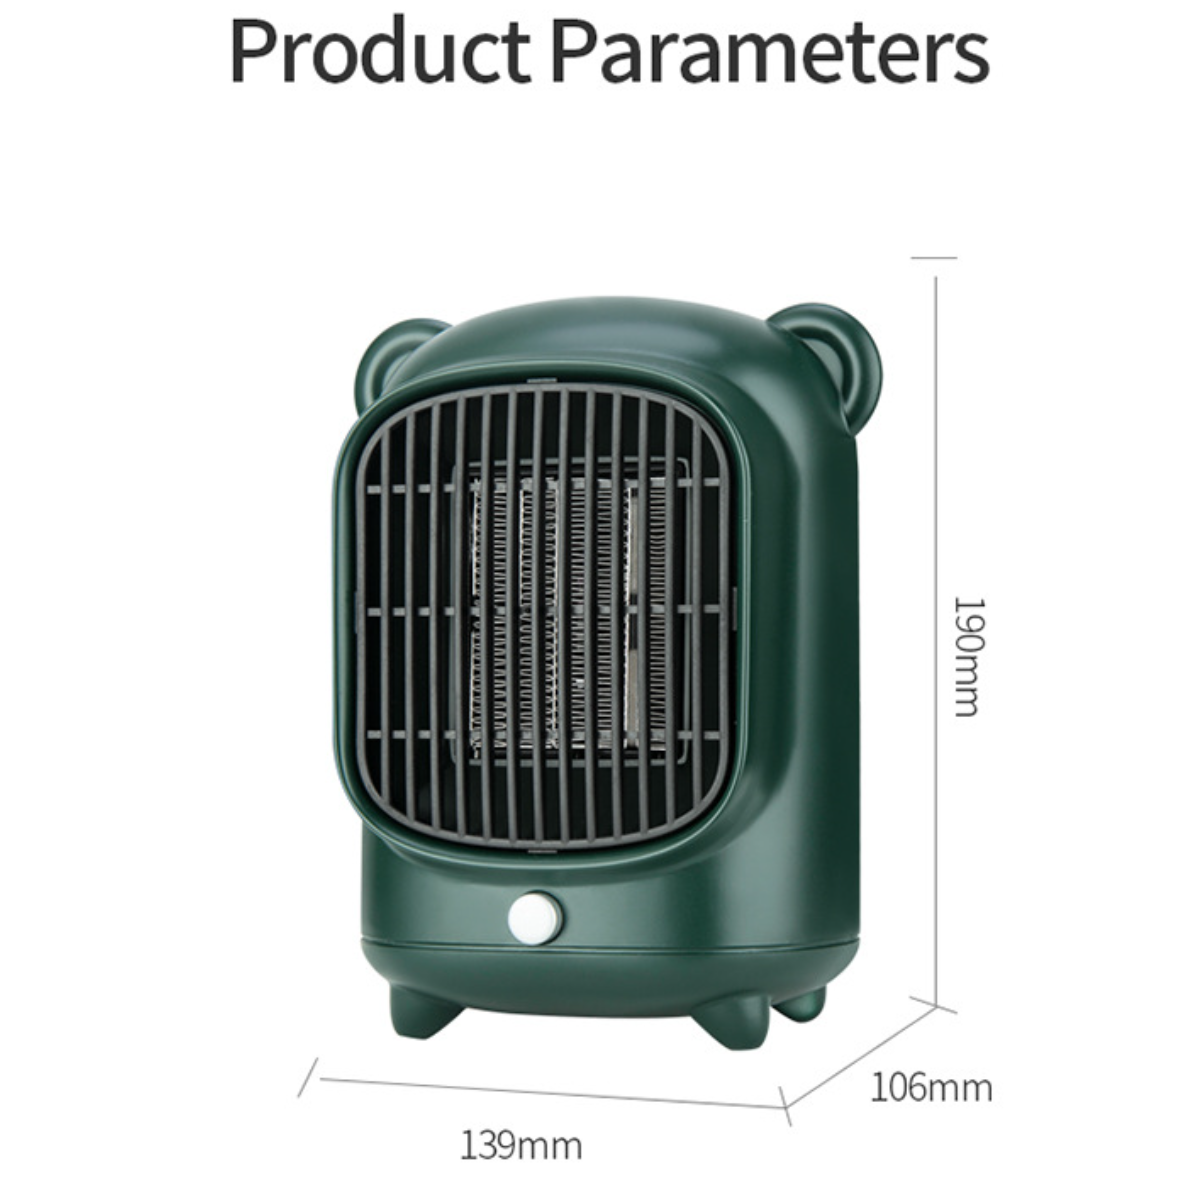 und (500 Ausschalten Heater-Green: Bear PTC-Schnellheizung, UWOT Electric geräuscharm, Mini-Elektroheizung Watt) sicheres leise